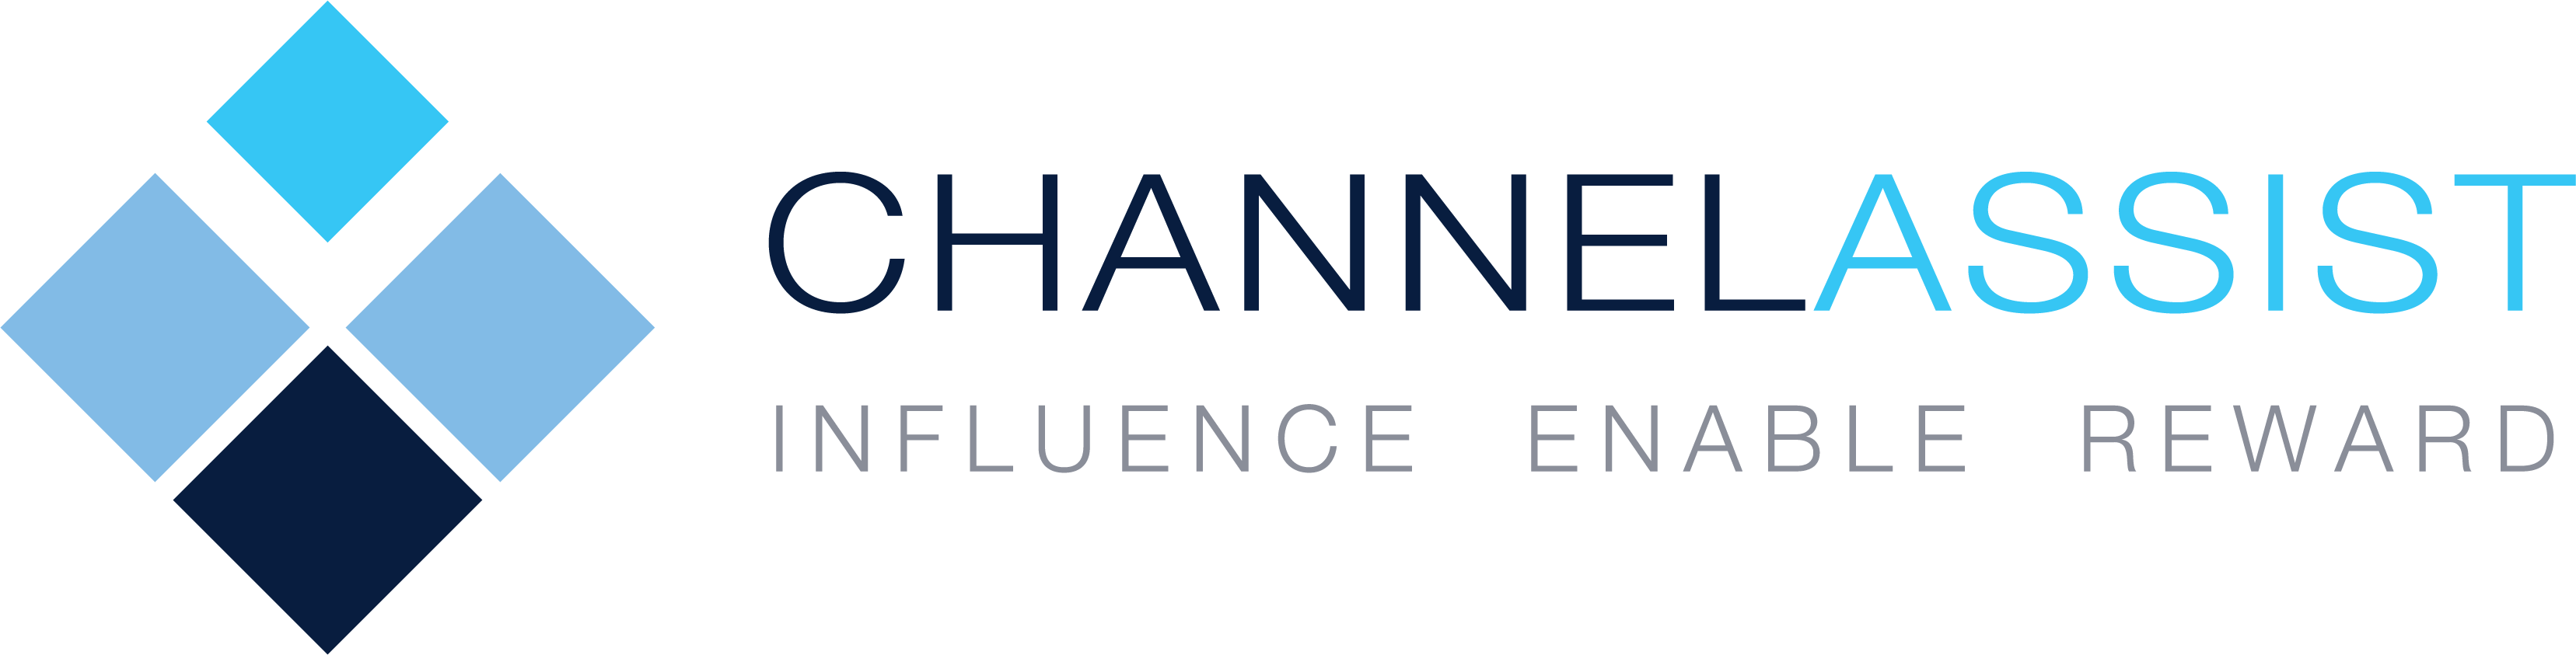 Channel Assist Logo